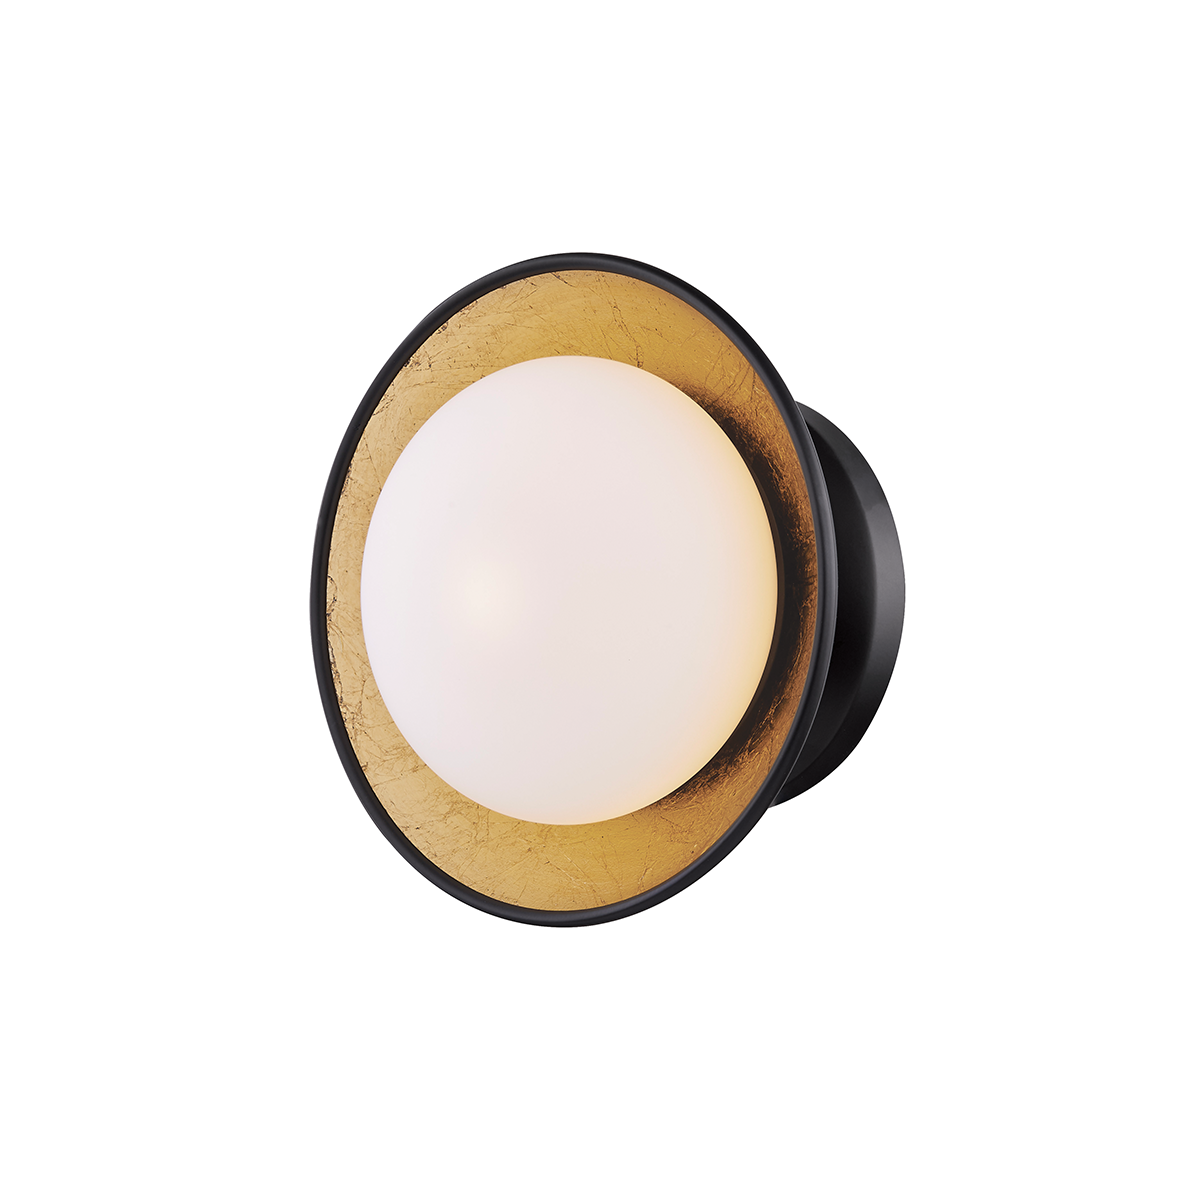 Cadence Small Light Fixture - Reimagine Designs - Flushmount, Flushmounts, new, Sconce